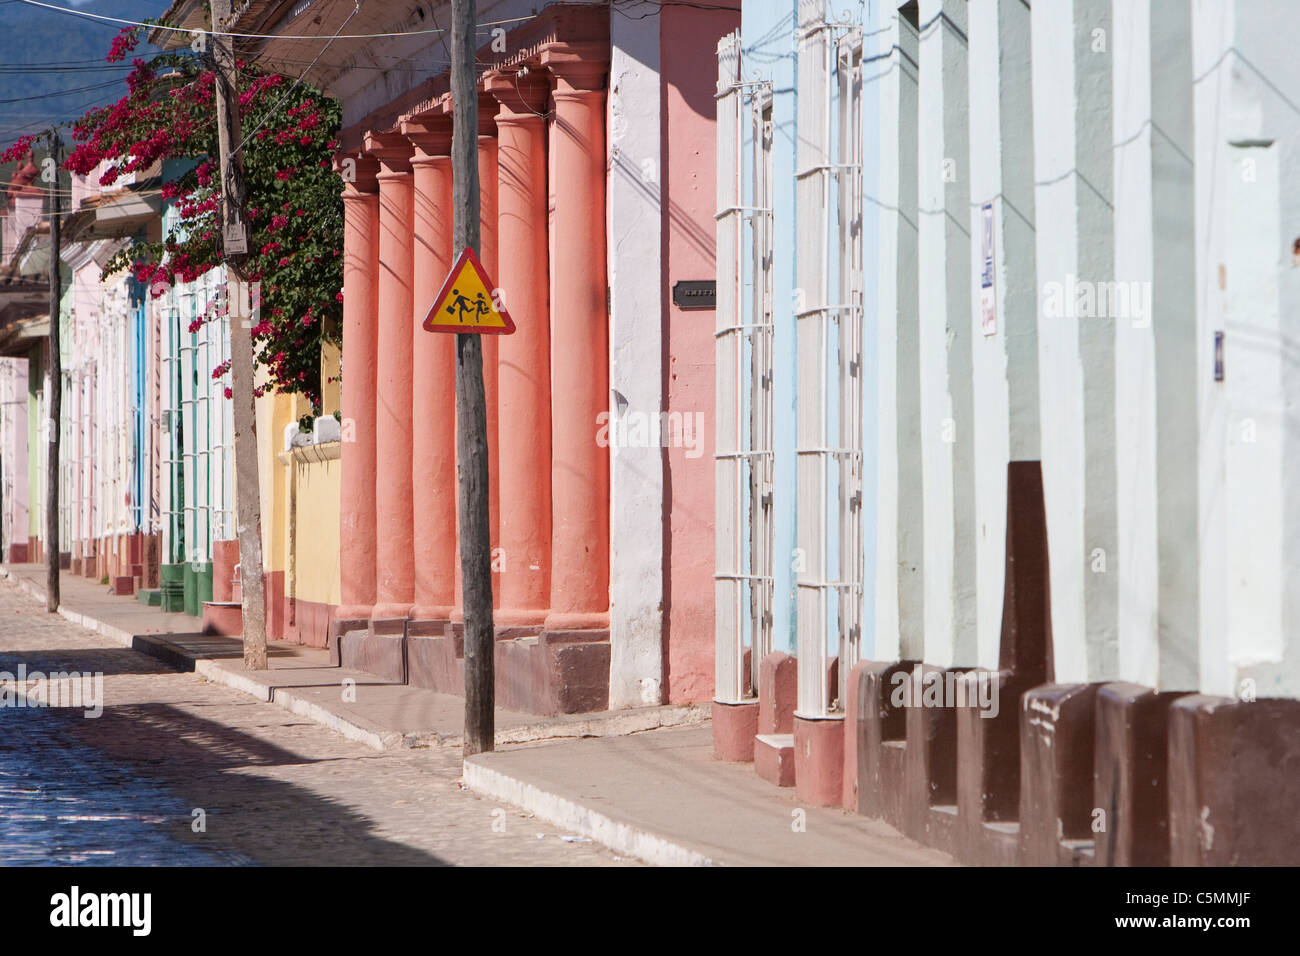 Cuba, Trinidad. Street Scene, Pastel Colors. Stock Photo